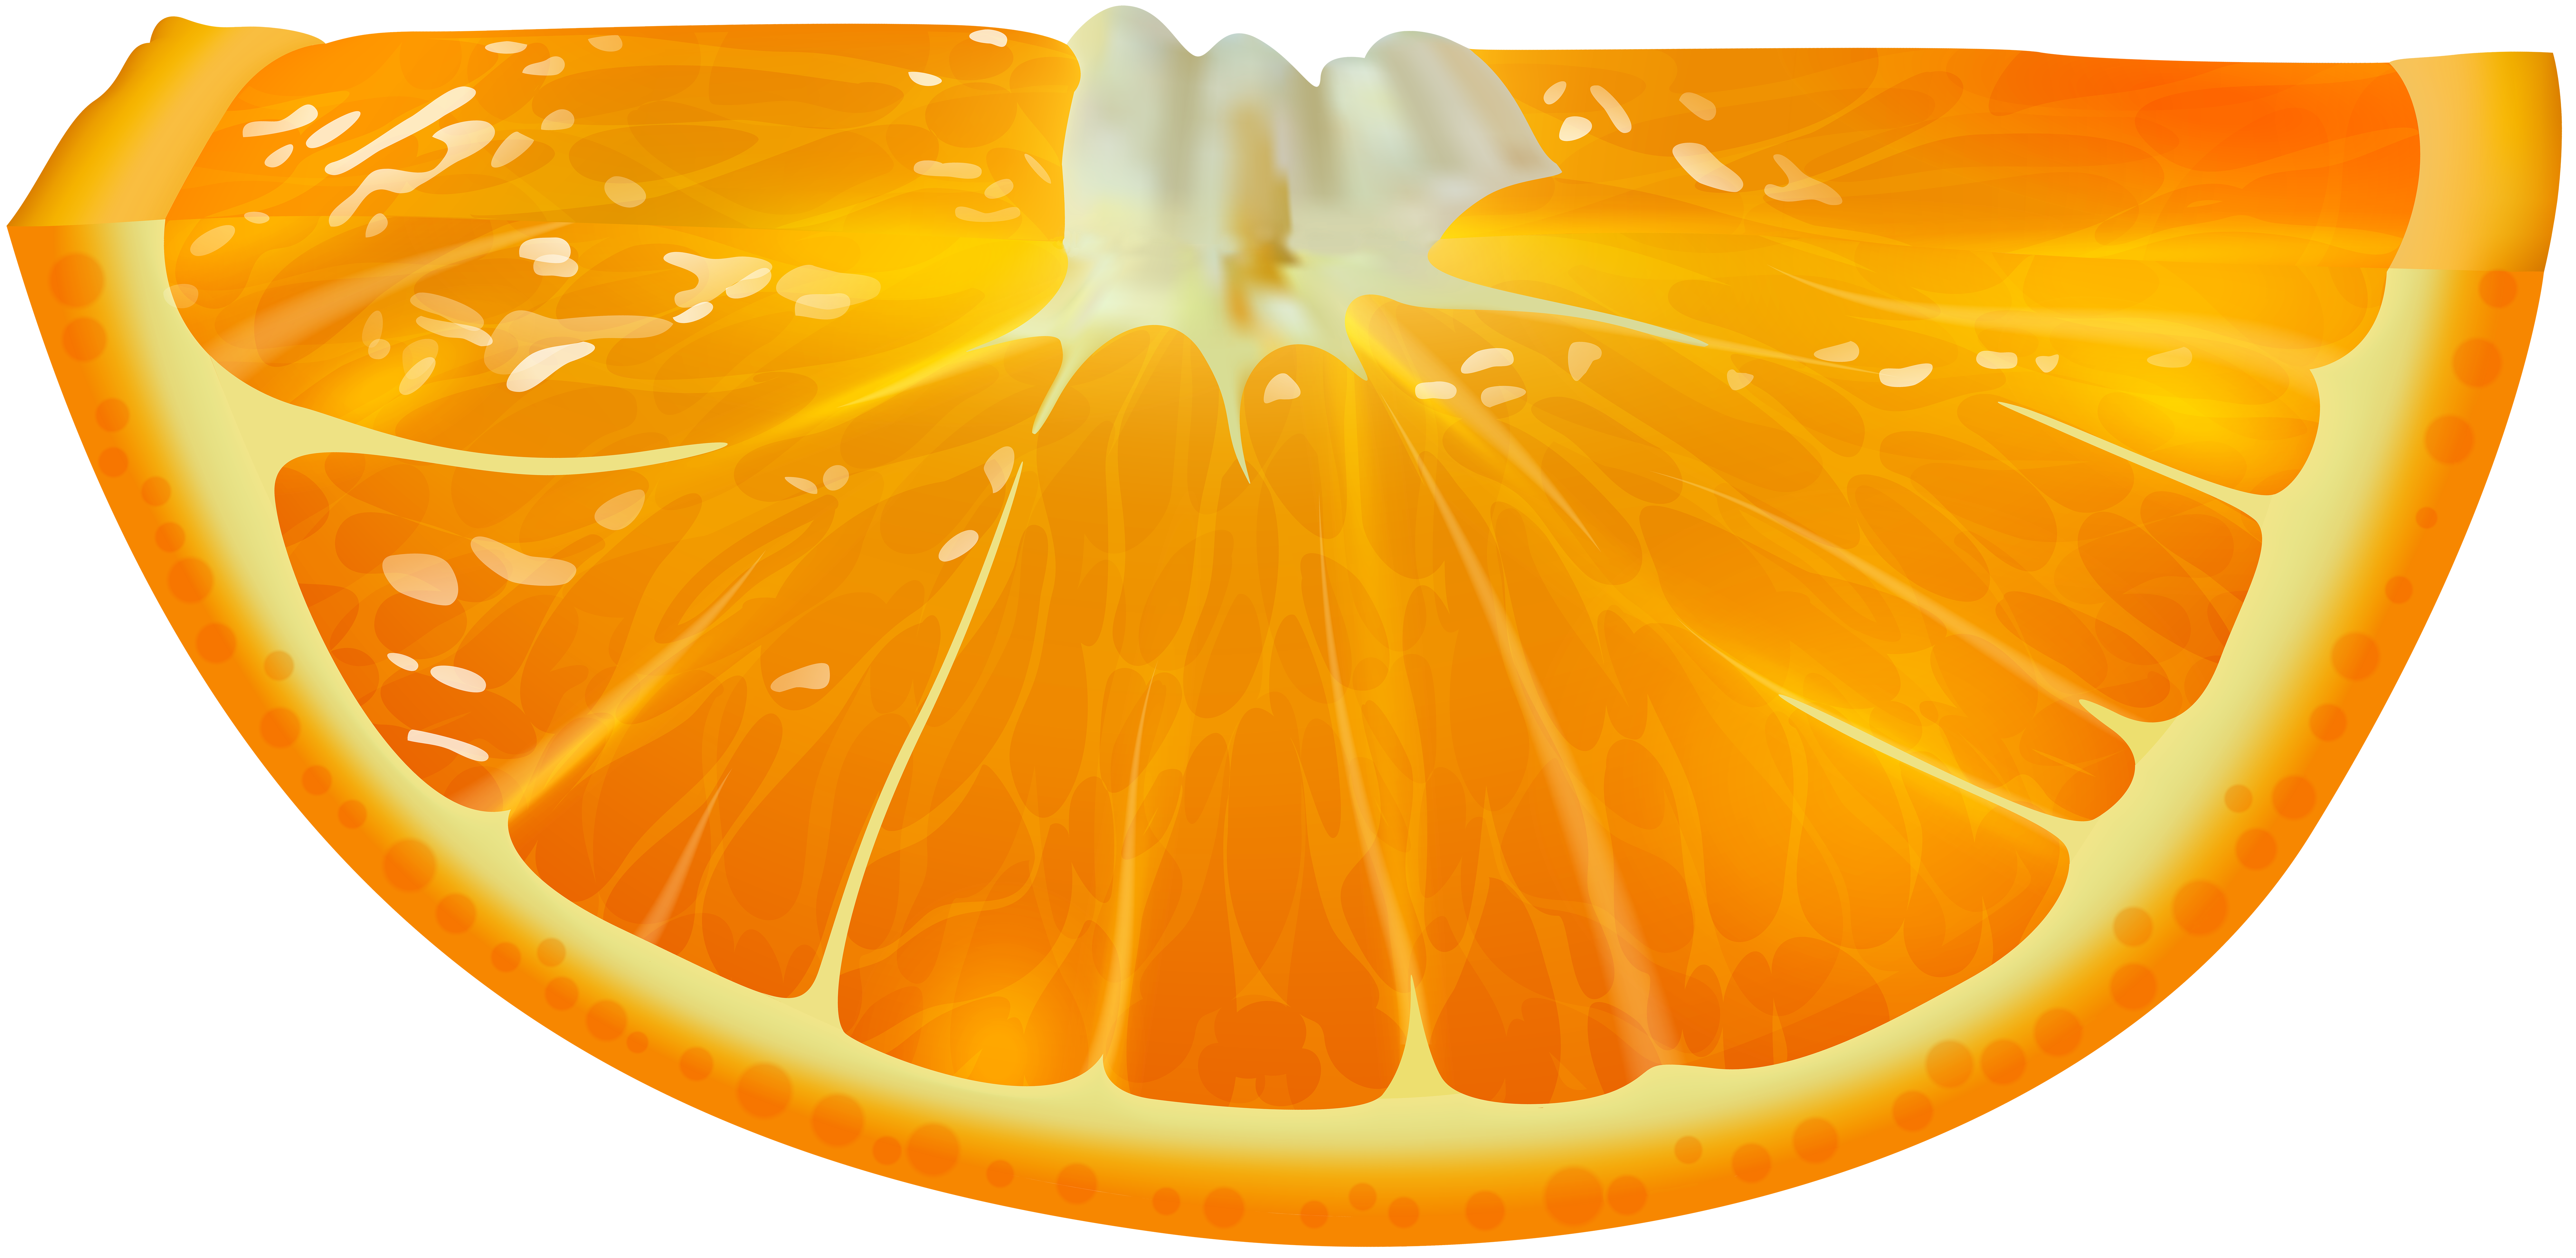 Orange Slice Transparent Image | Gallery Yopriceville - High-Quality